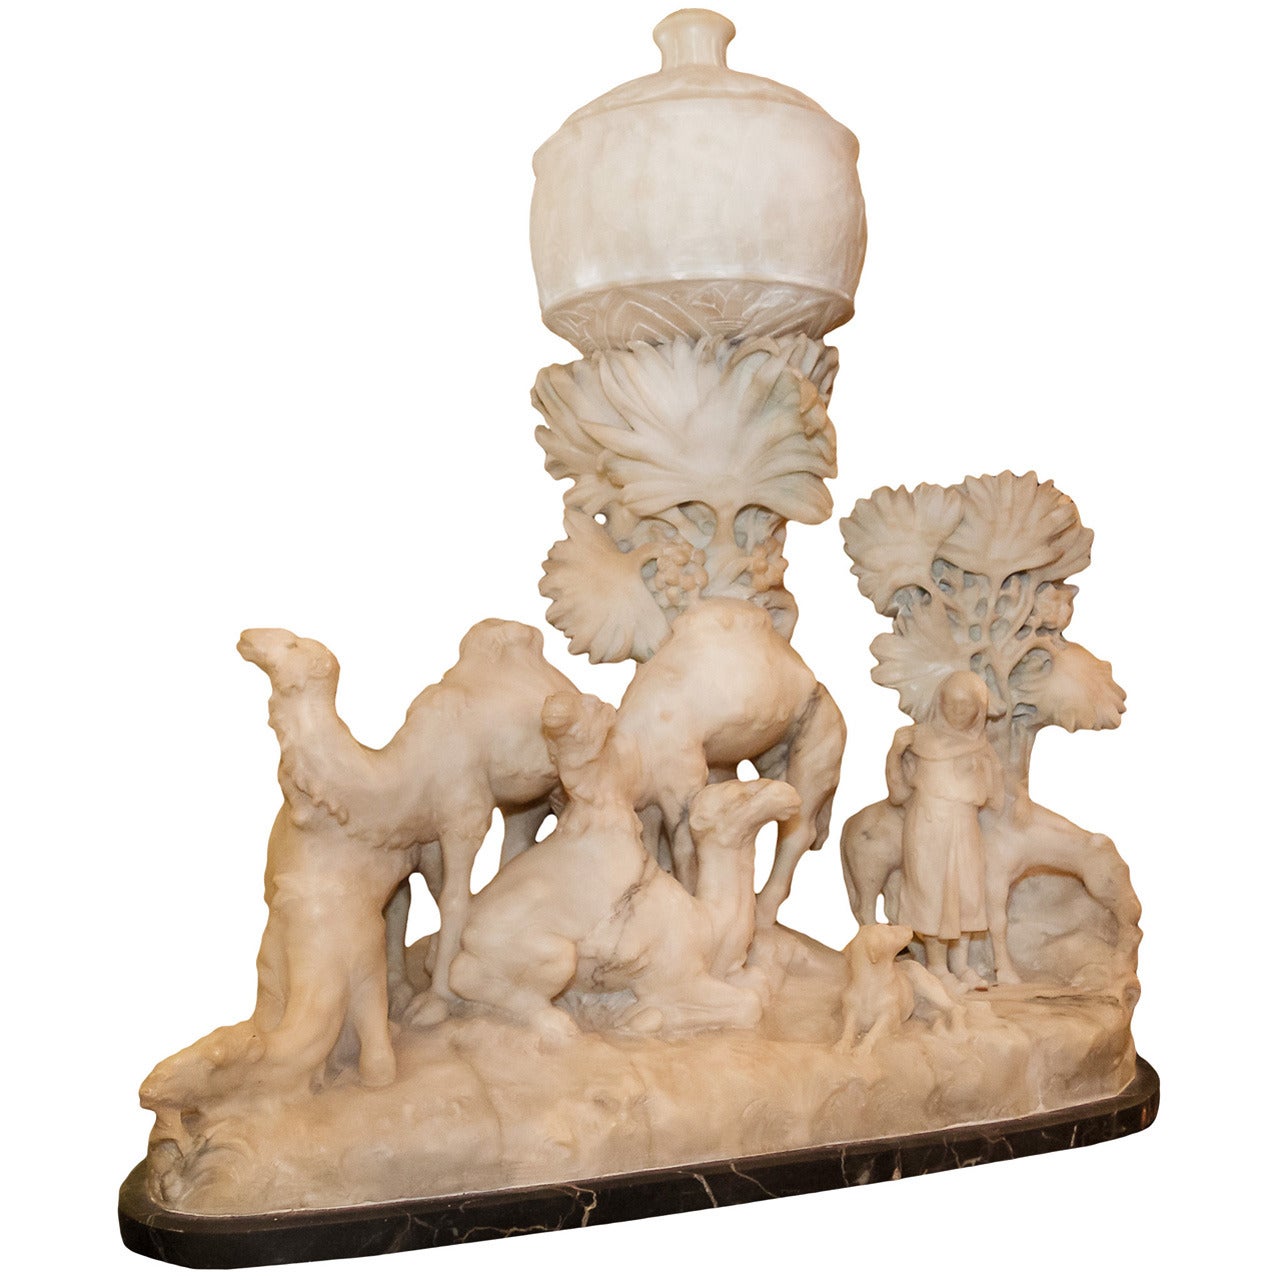 Orientalische geschnitzte Alabaster-Wüstenkamelien-Skulptur / Lampe, beleuchtete Skulptur